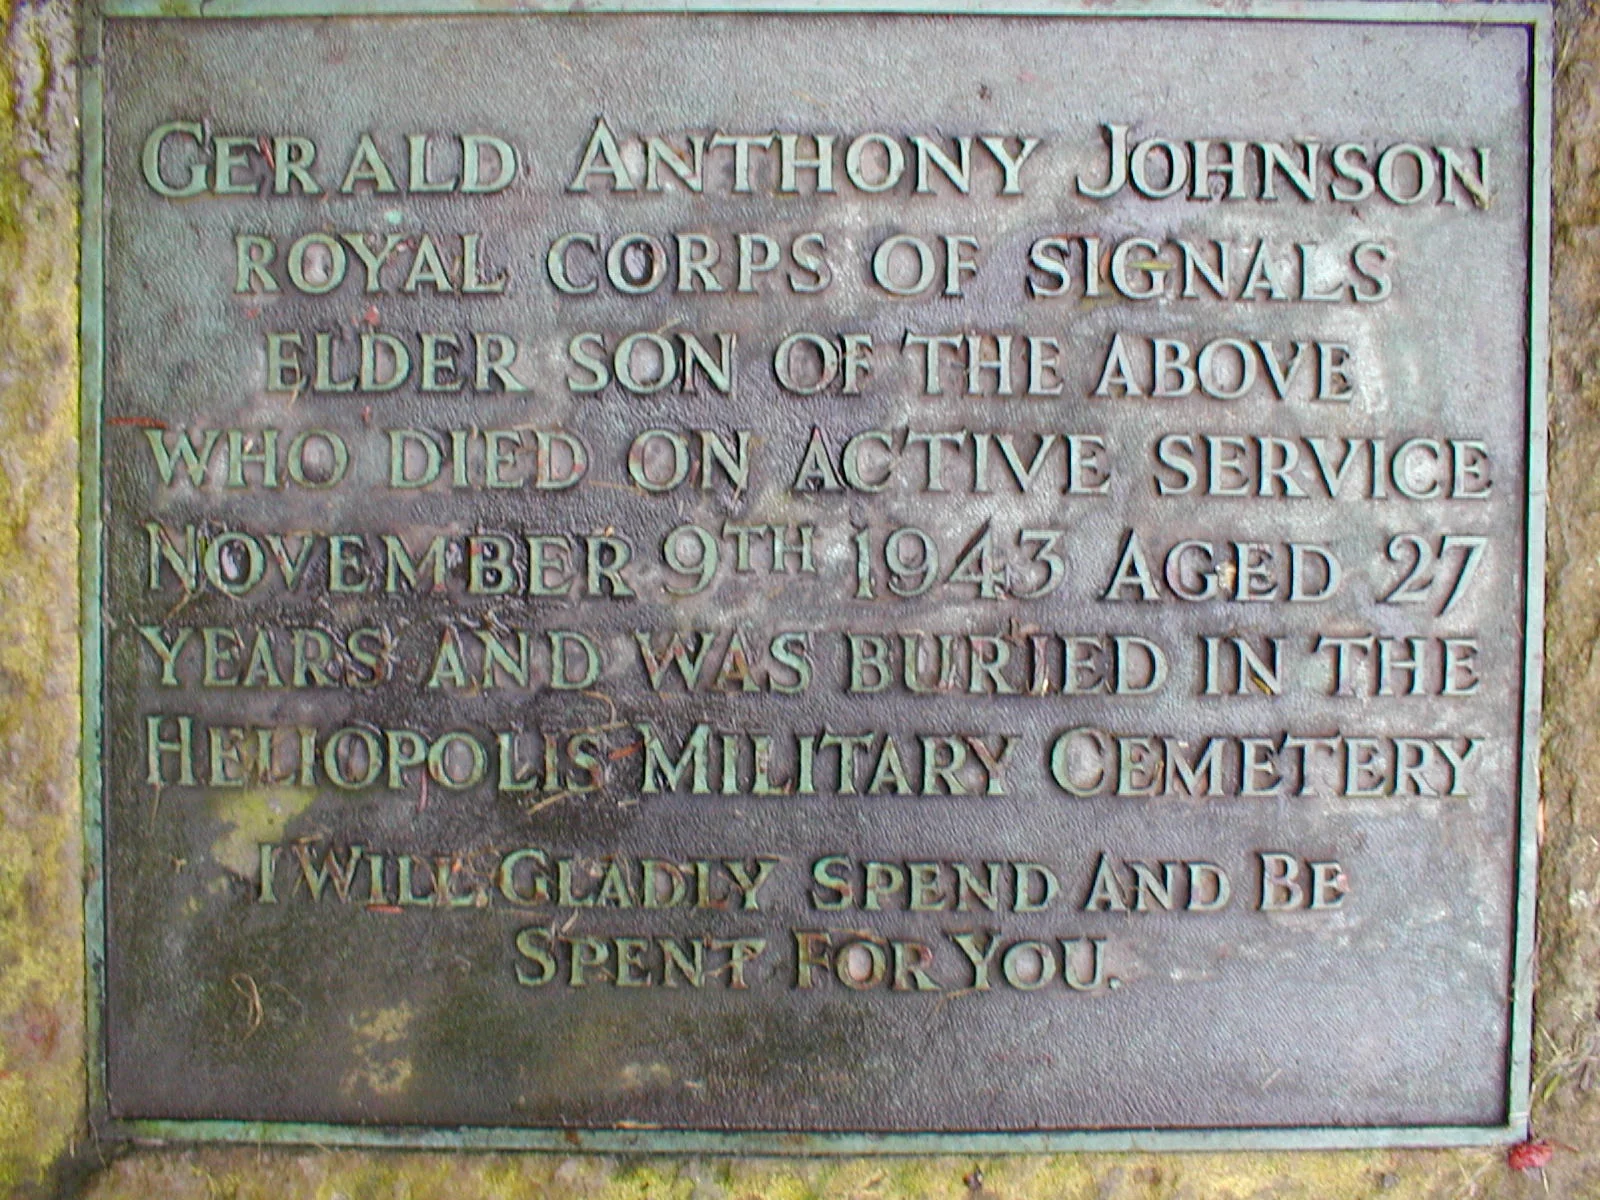 Gerald Anthony JOHNSON